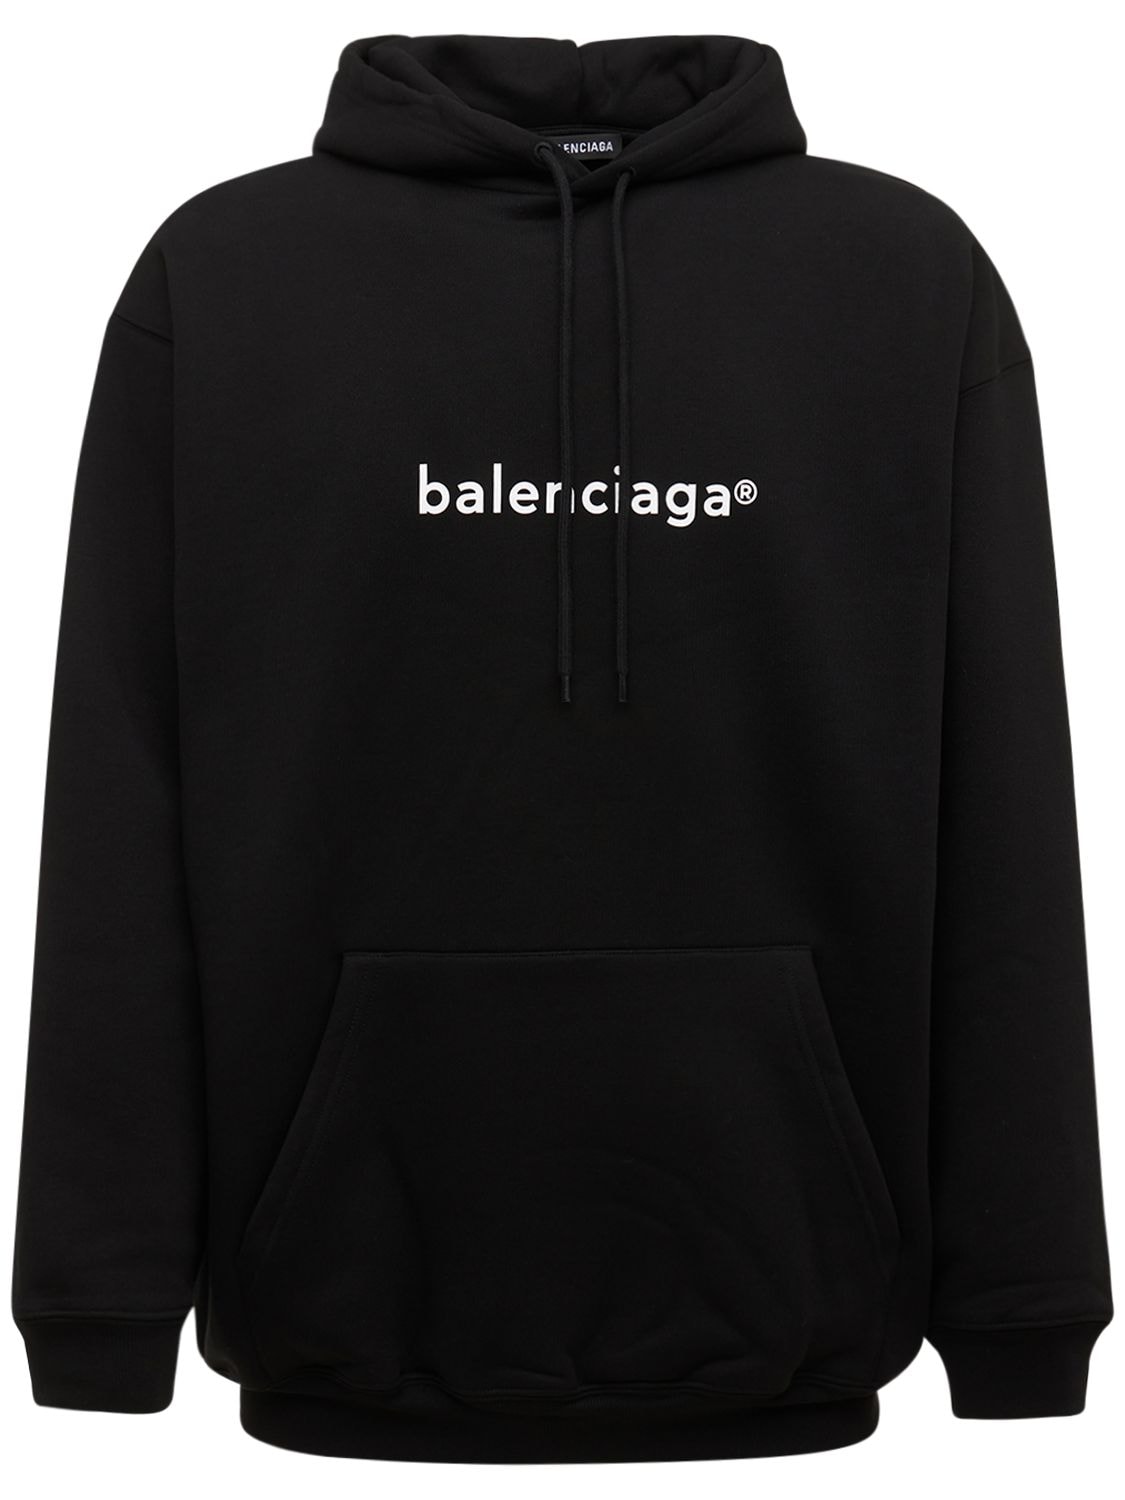 BALENCIAGA Logo Printed Cotton Sweatshirt Hoodie